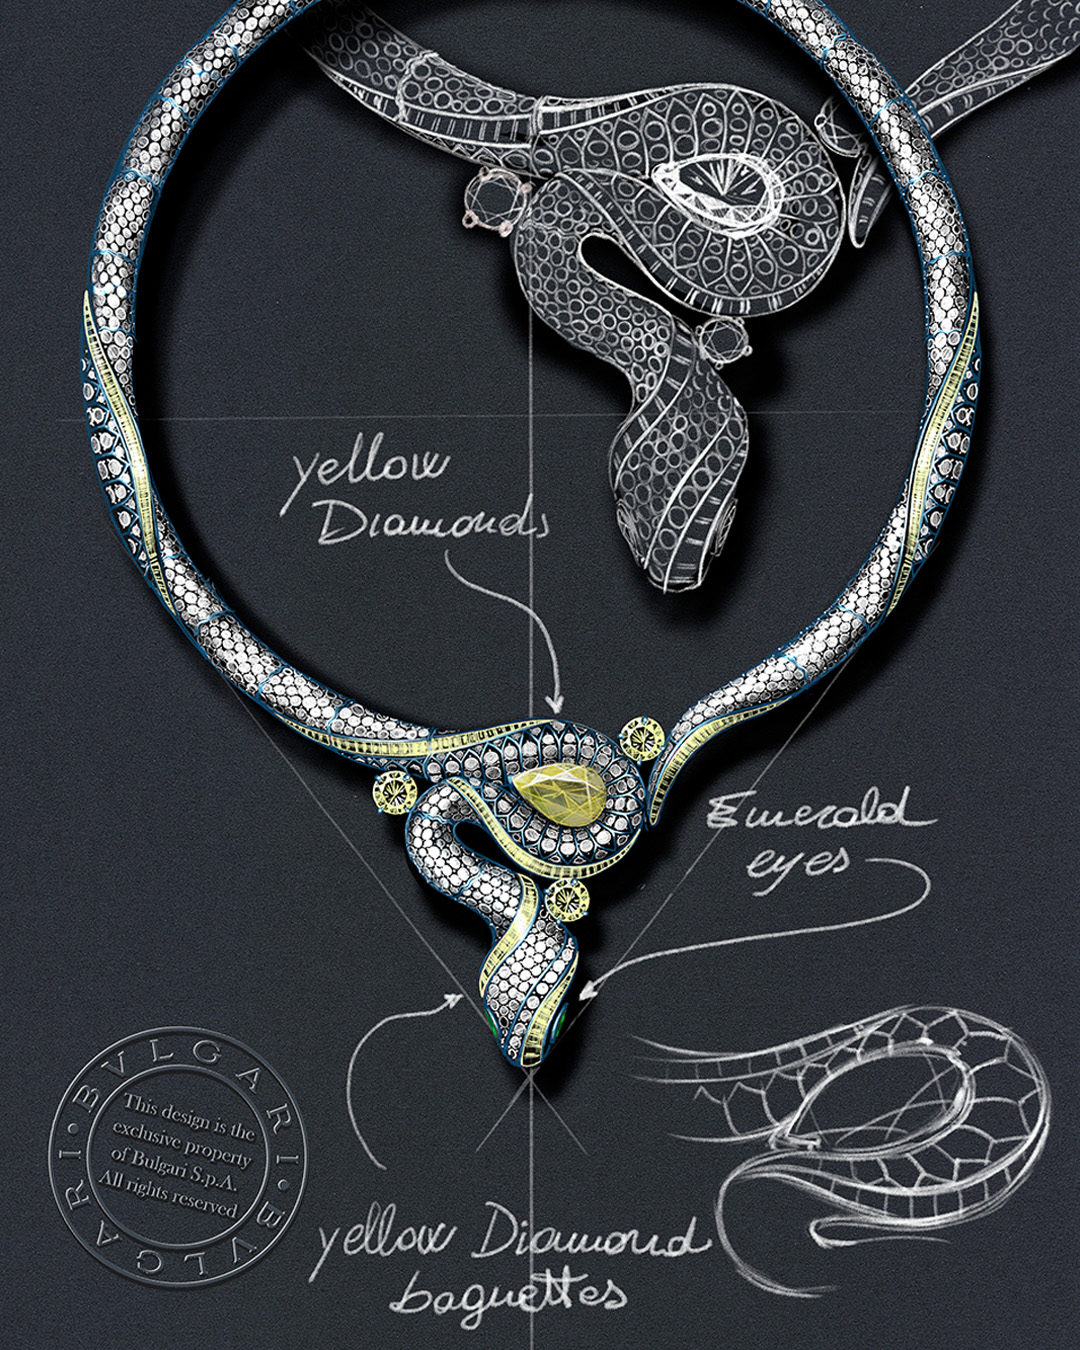 A Legendary Icon. The Yellow Diamond Hypnosis Serpenti necklace